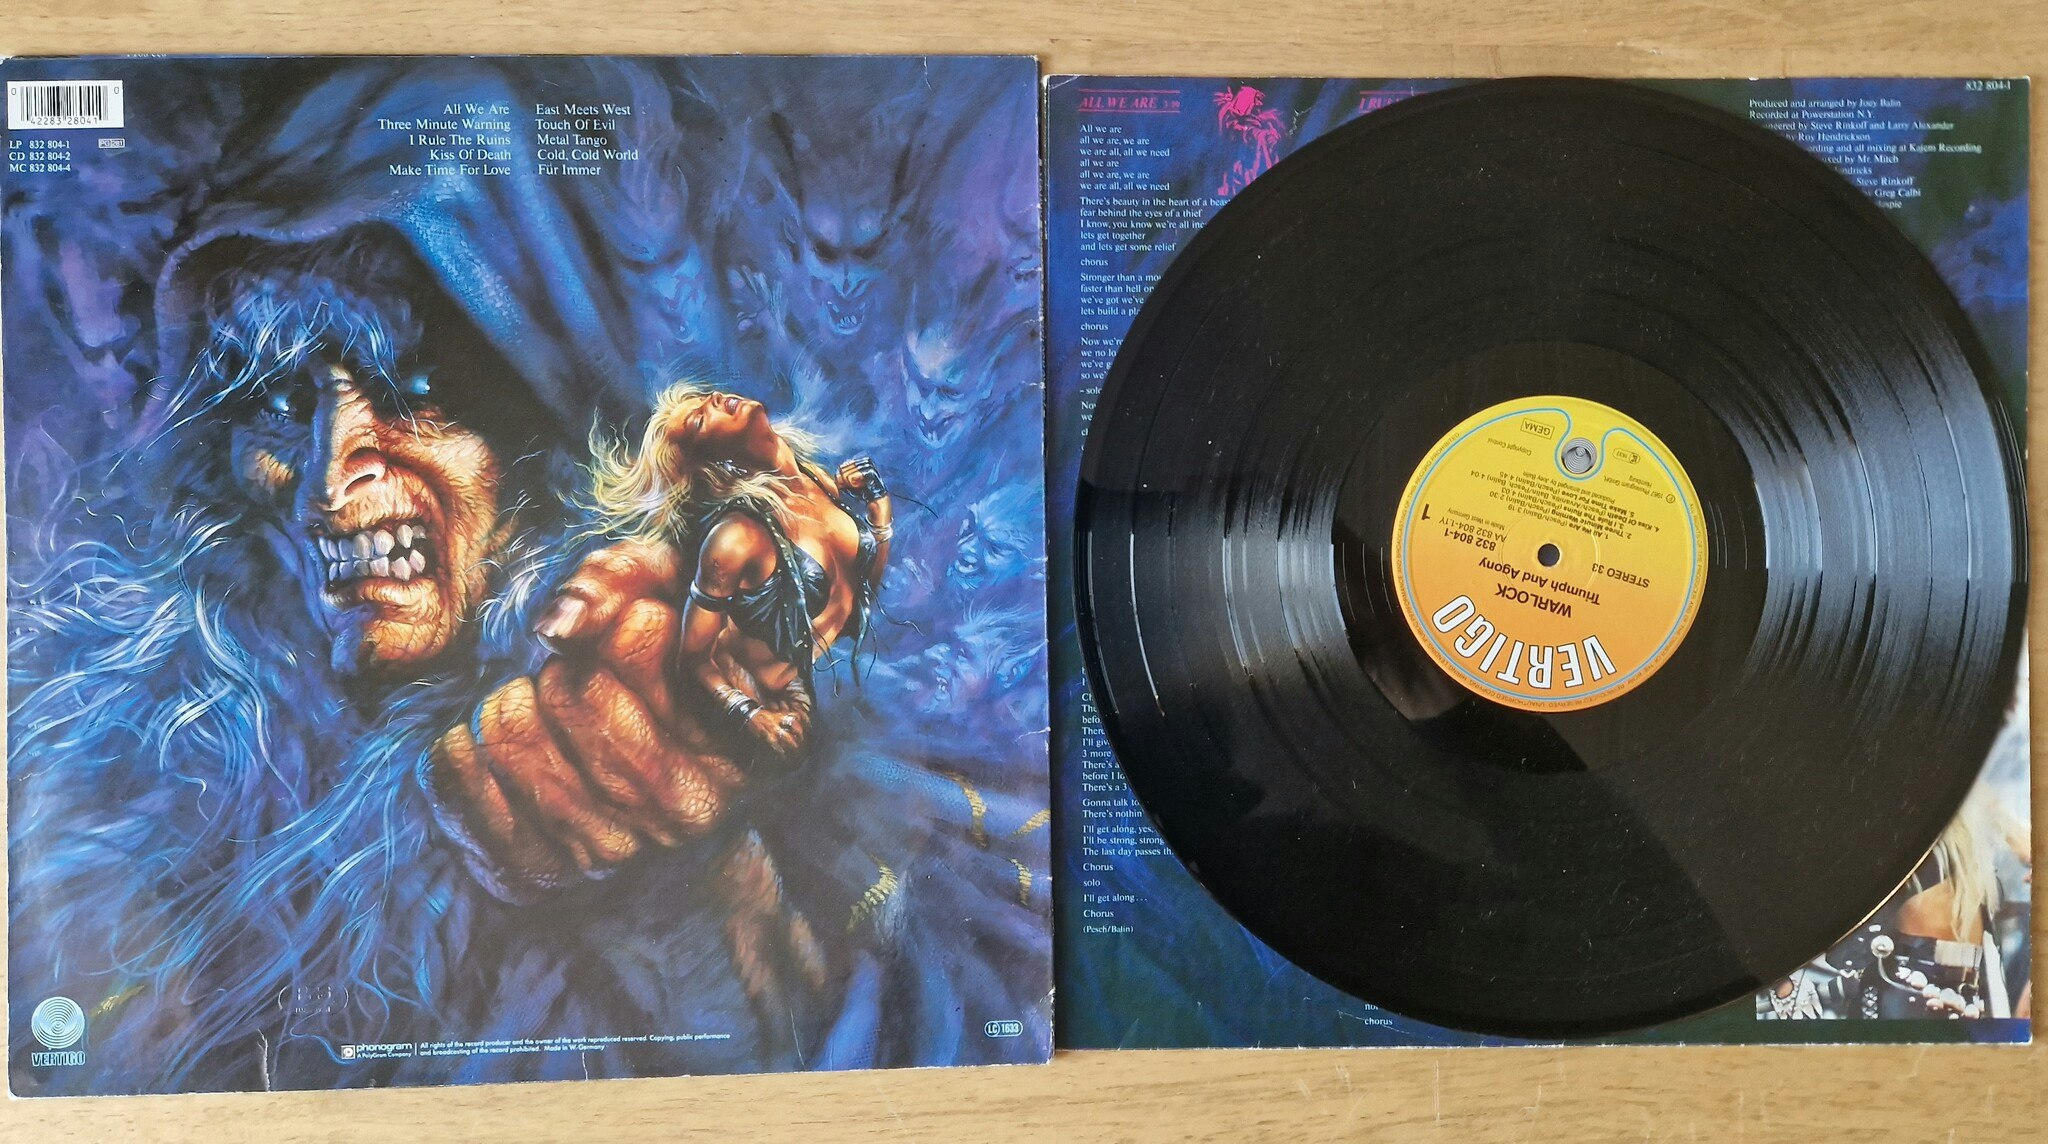 Warlock, Triumph and agony. Vinyl LP